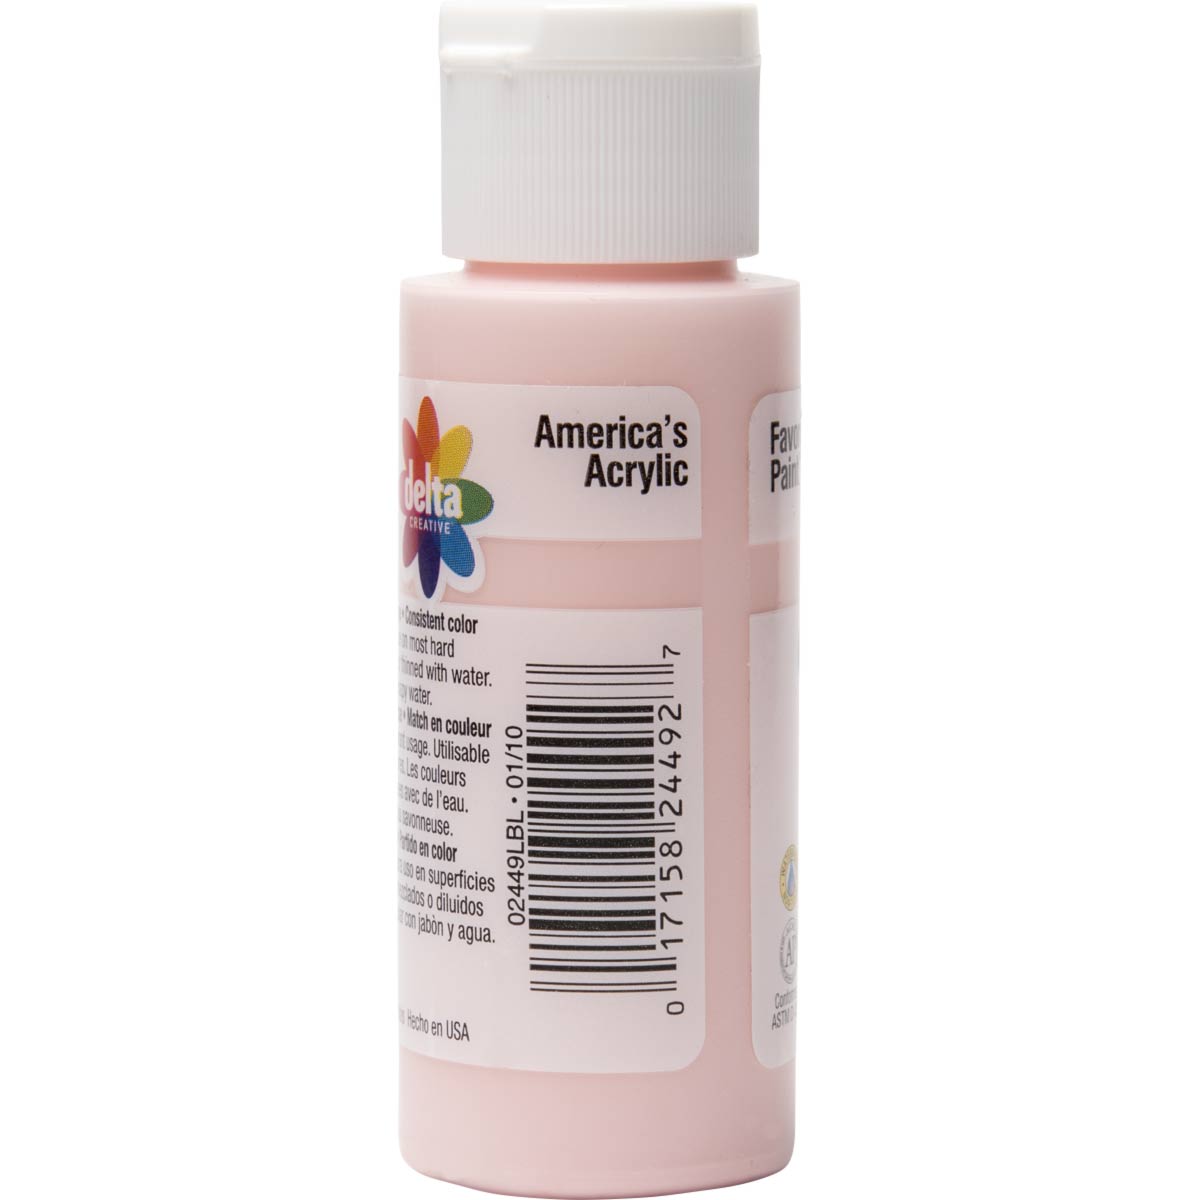 Delta Ceramcoat Acrylic Paint - Hydrangea Pink, 2 oz. - 024490202W